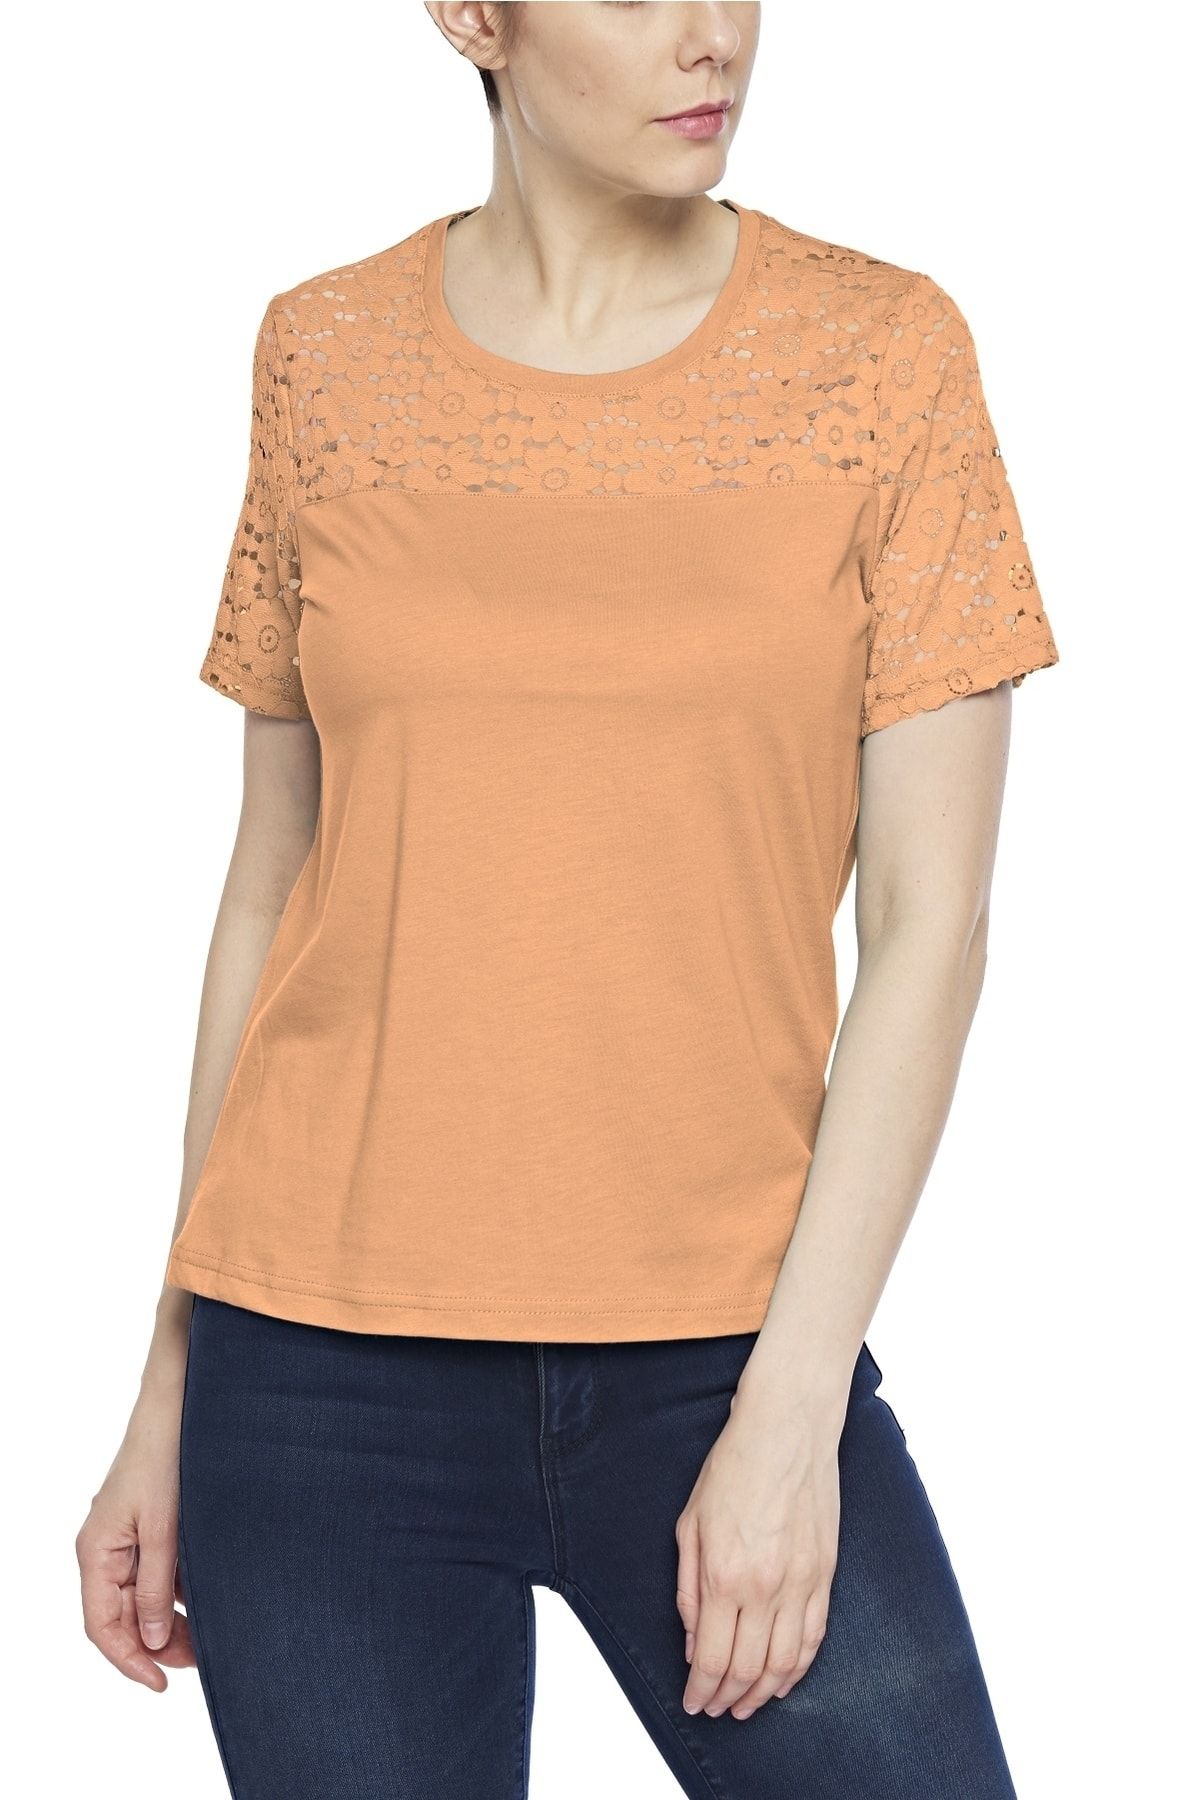 fsm1453 Kadın Pamuklu Modal Kısa Kollu Dantelli Üst T-shirt